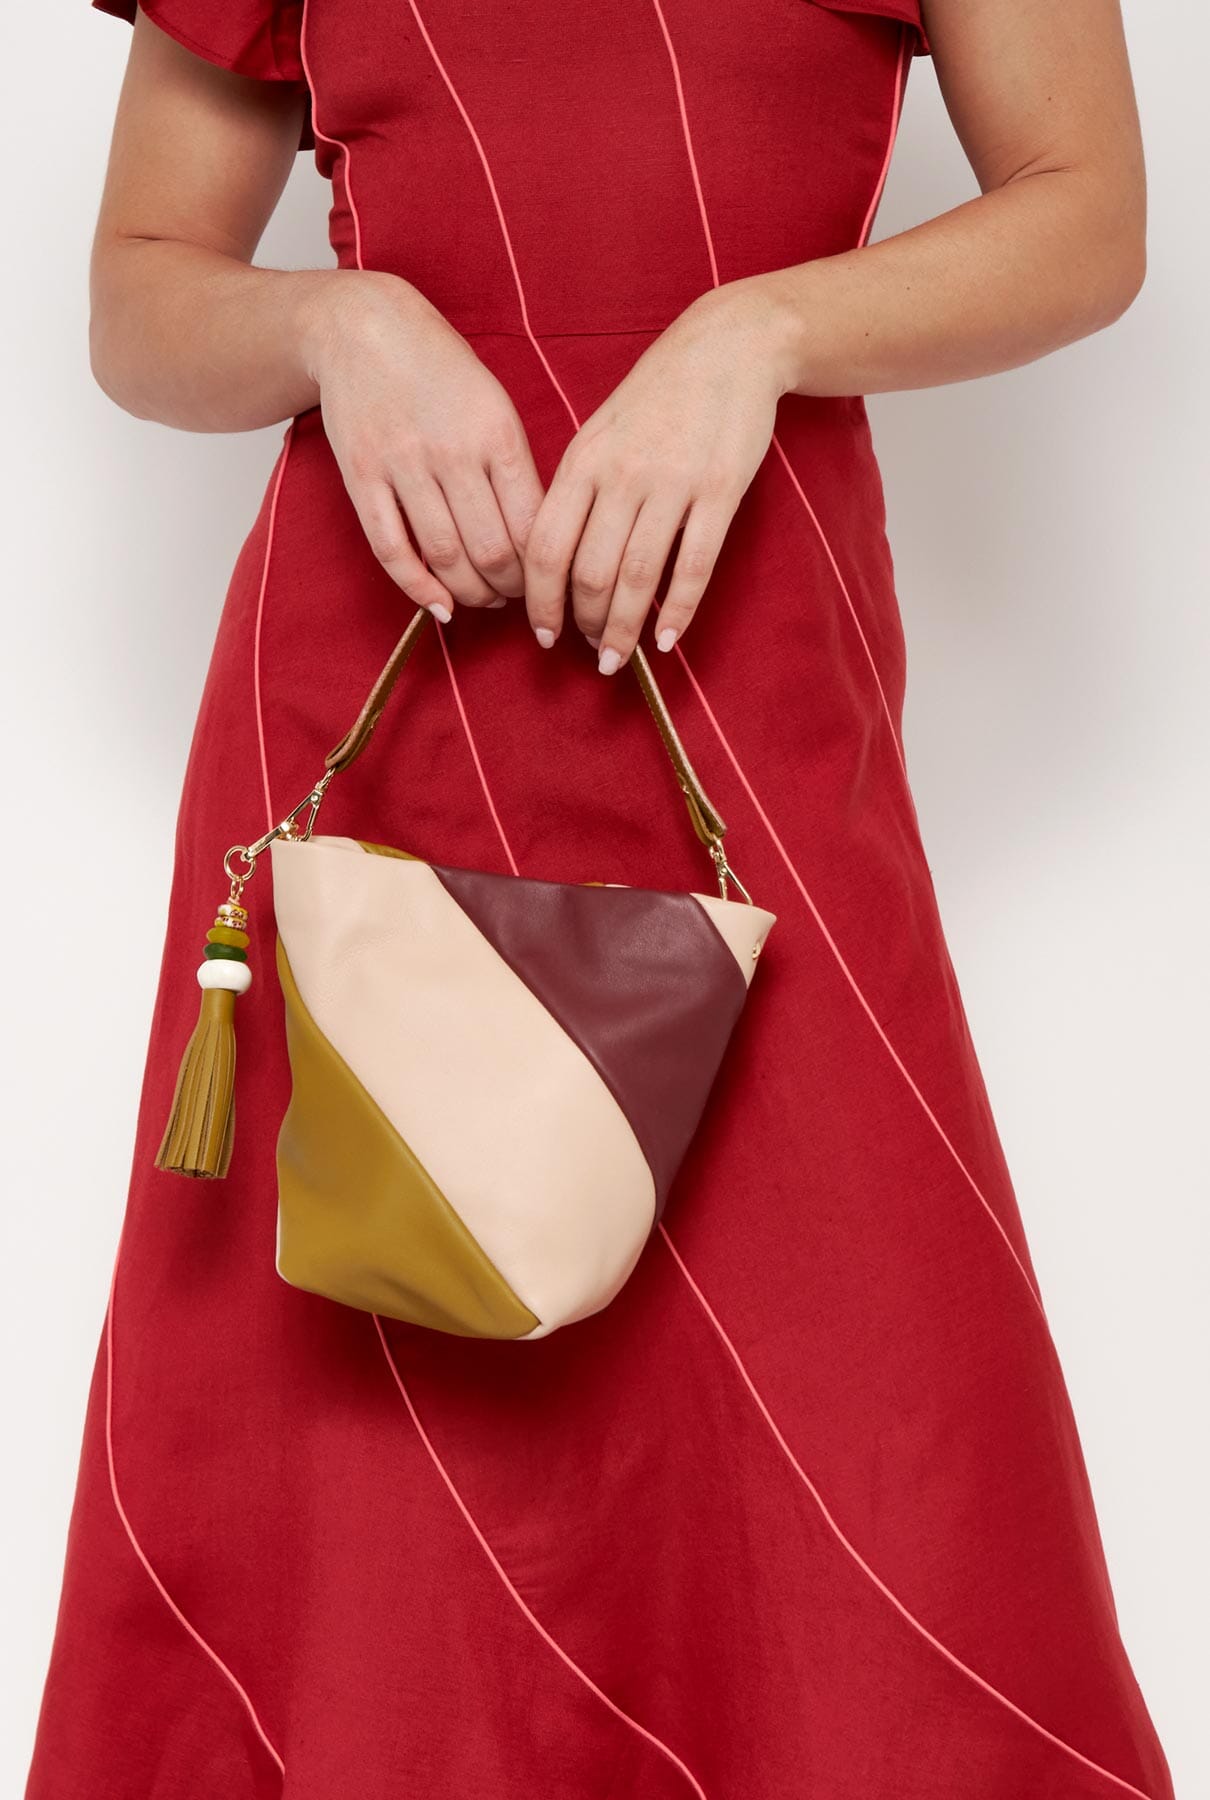 The Mini Lola Bag Tricolor Burdeos Hand bags The Bag Lab 